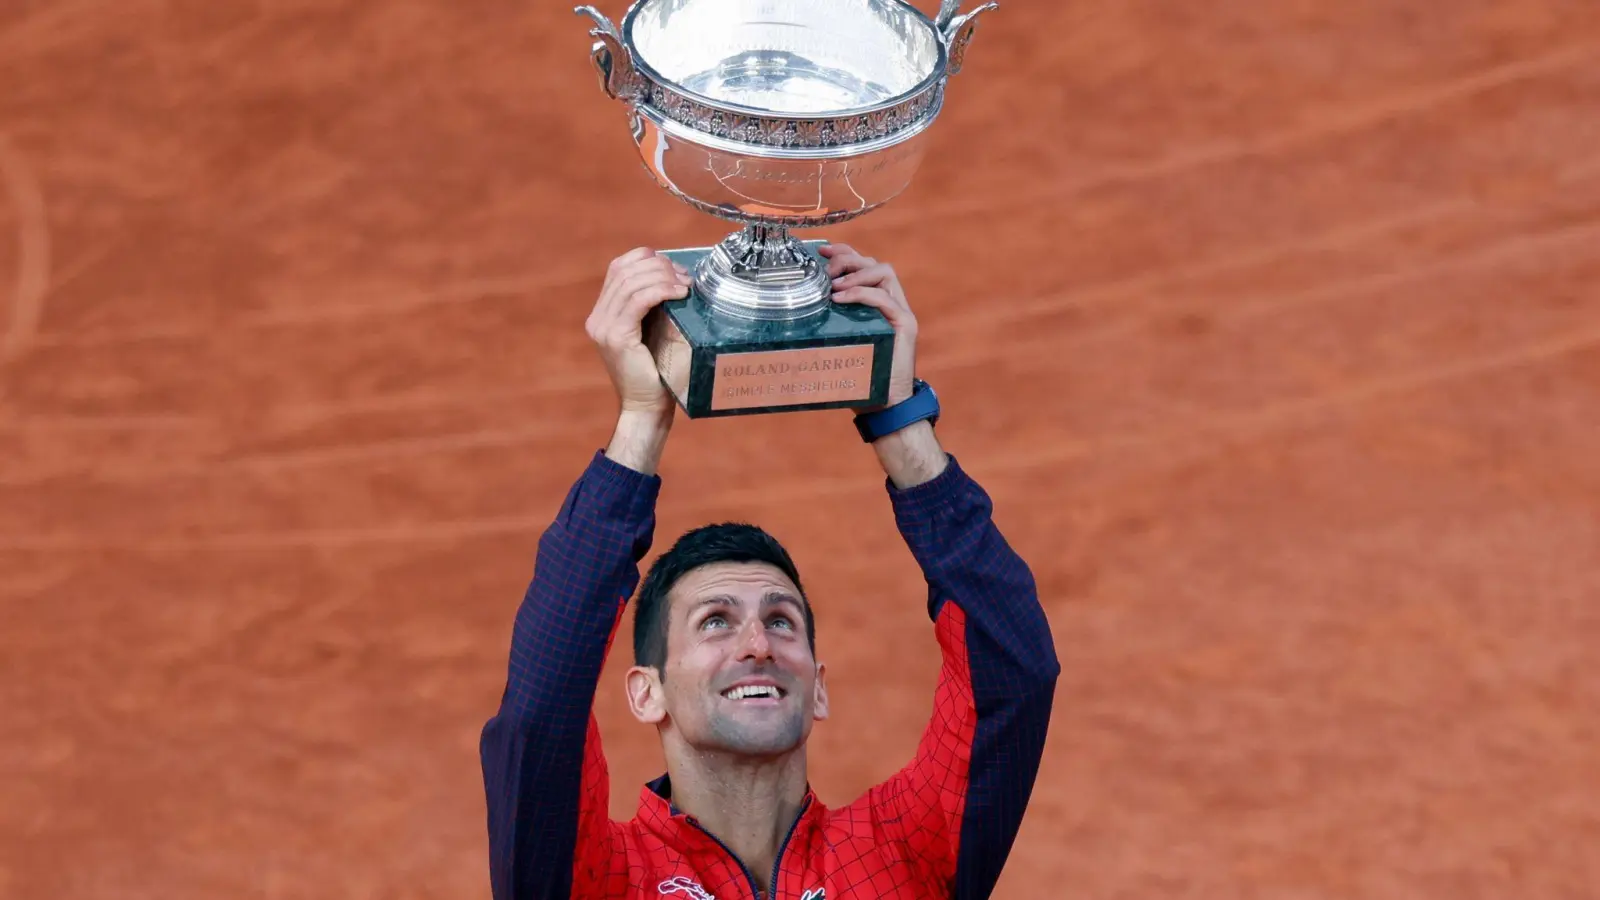 French-Open-Sieger Novak Djokovic reckt die Trophäe in die Höhe. (Foto: Jean-Francois Badias/AP/dpa)